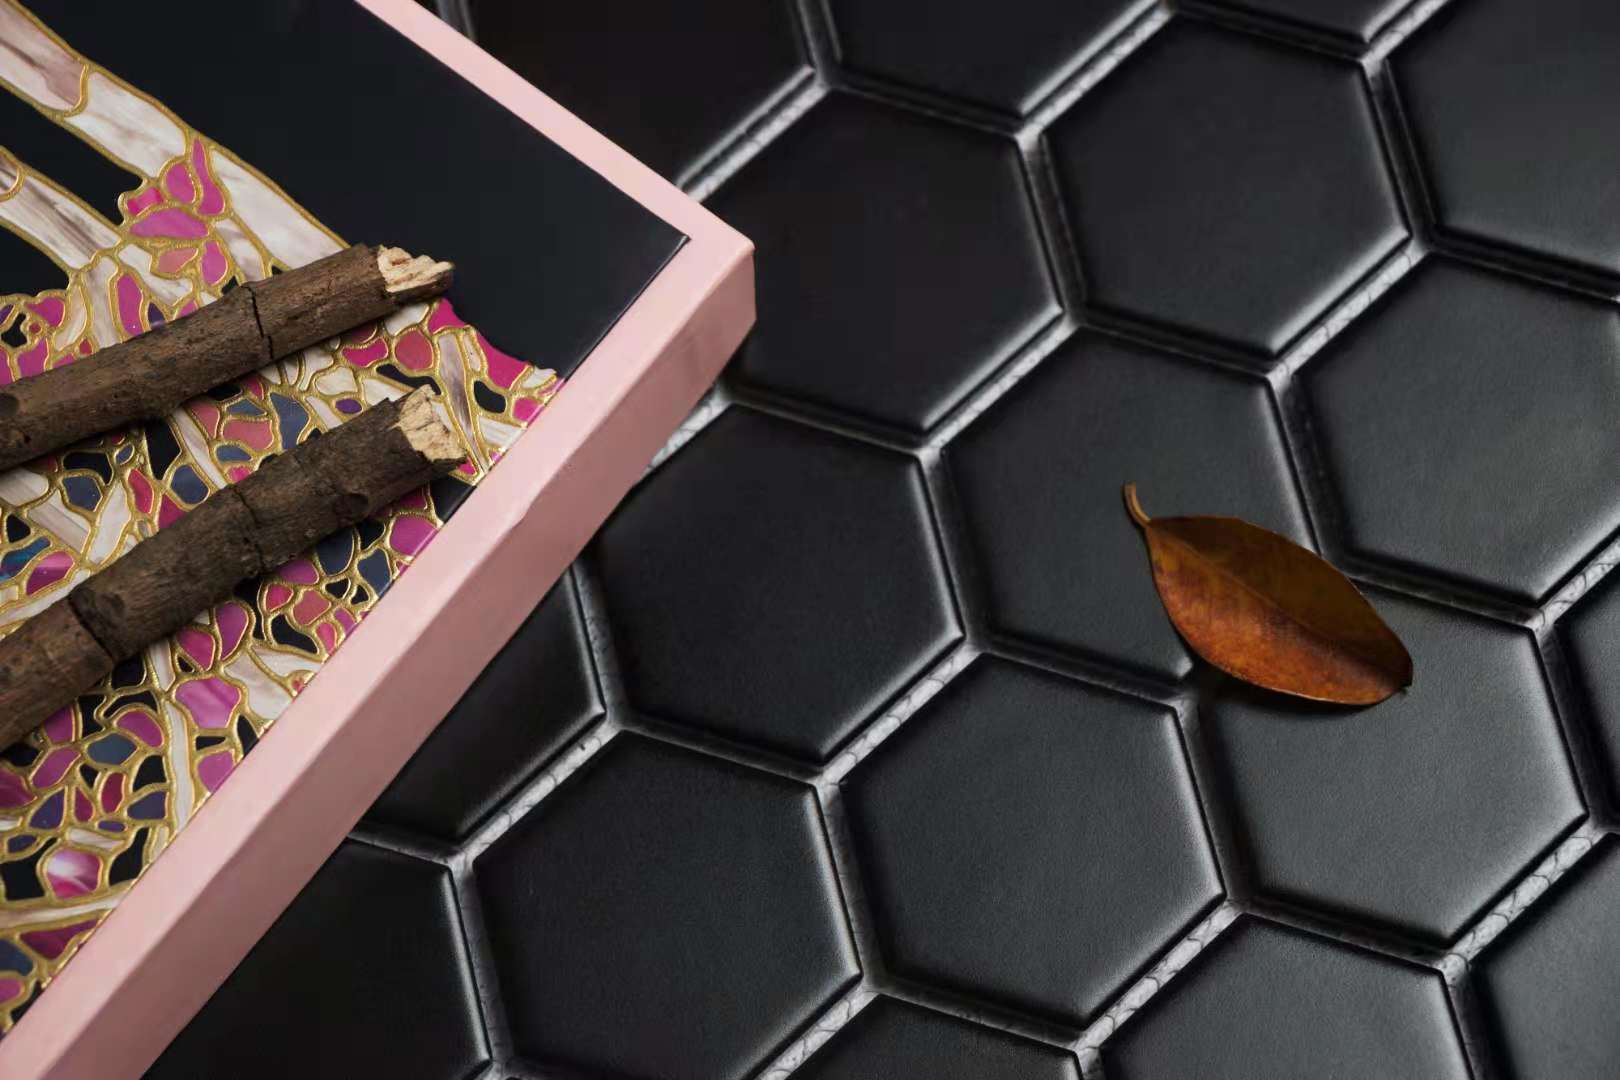 Retro 2" Hexagon Porcelain Tile, Matte Finished Floor and Wall Tile - 9 Square Feet Per Carton